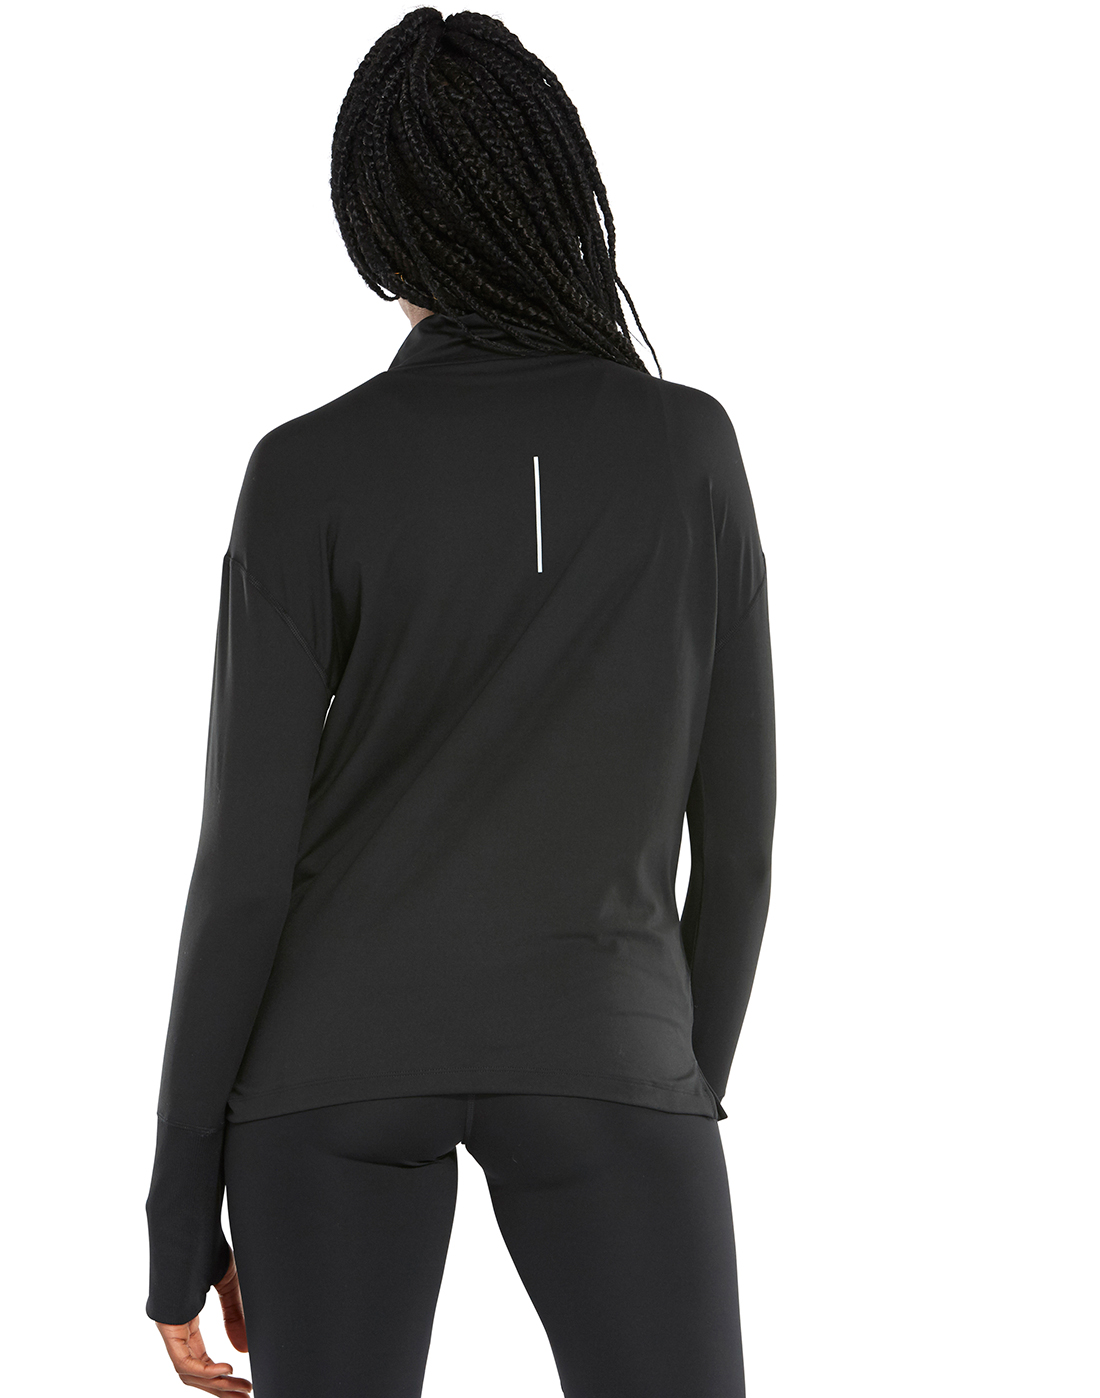 Nike Womens Element Half Zip Top - Black | Life Style Sports IE